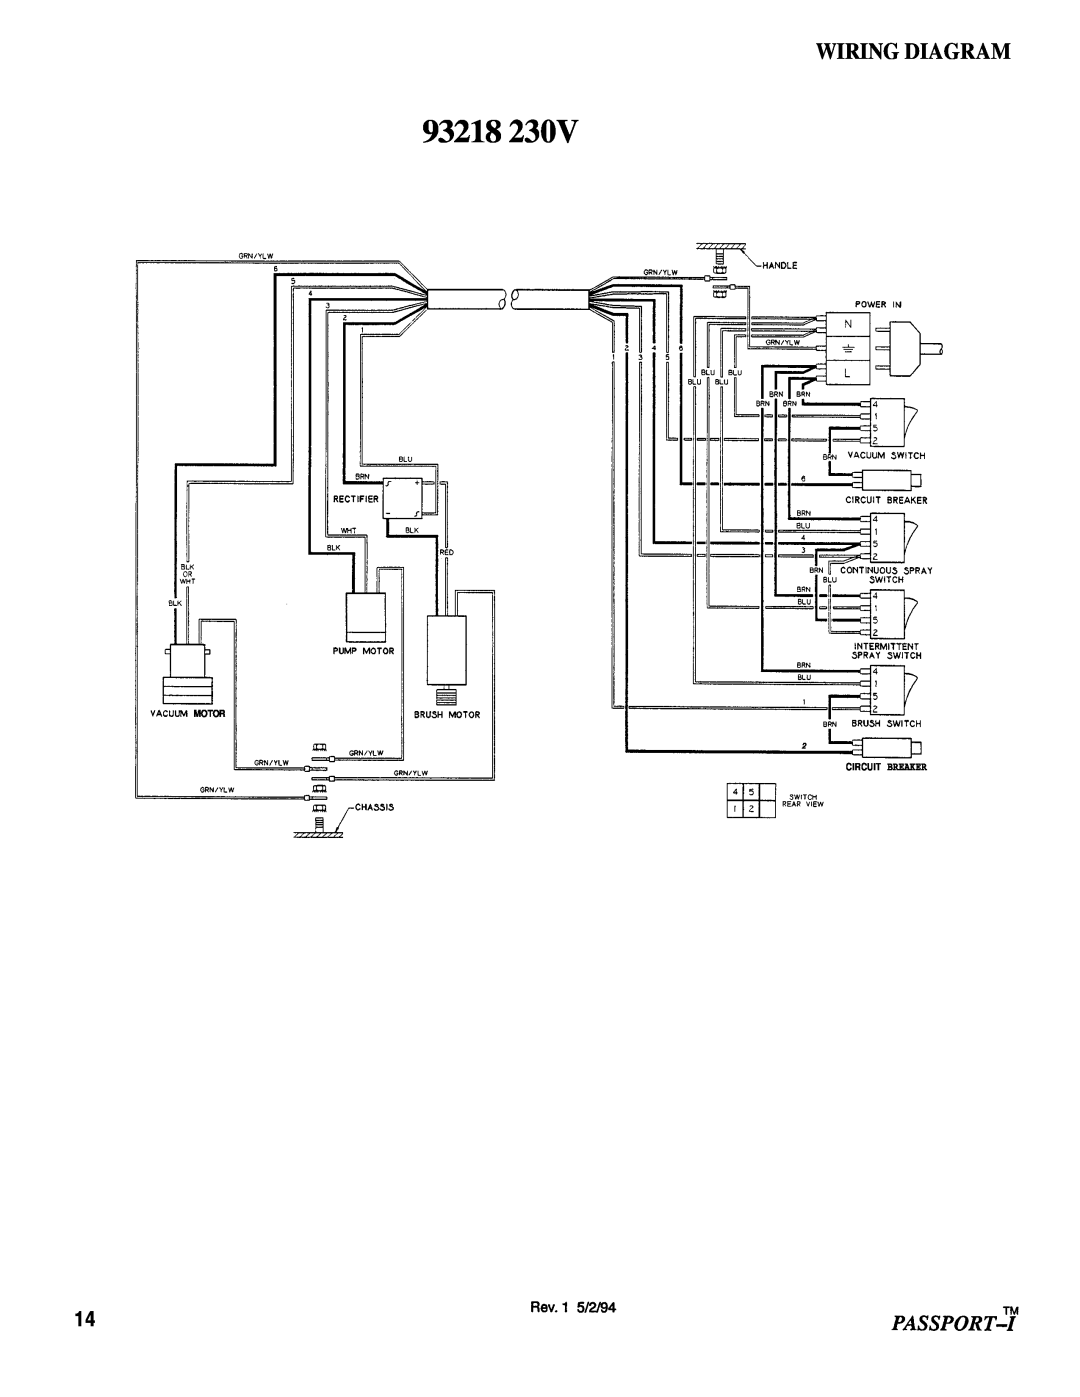 Windsor PSP-IG manual 93218, Wiring Diagram, Passport, Rev.1 5/2/94, Circuit Breaker, Vacuvm Motor, Grniylw 